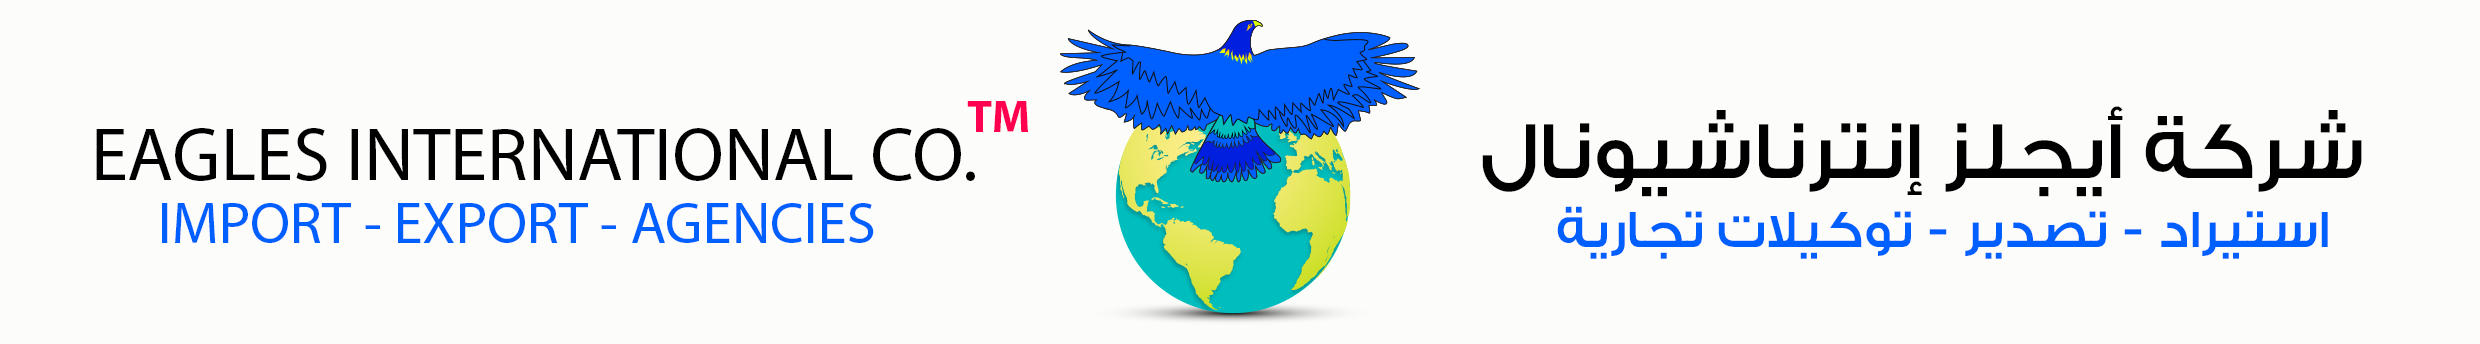 Eagles International Co. Logo